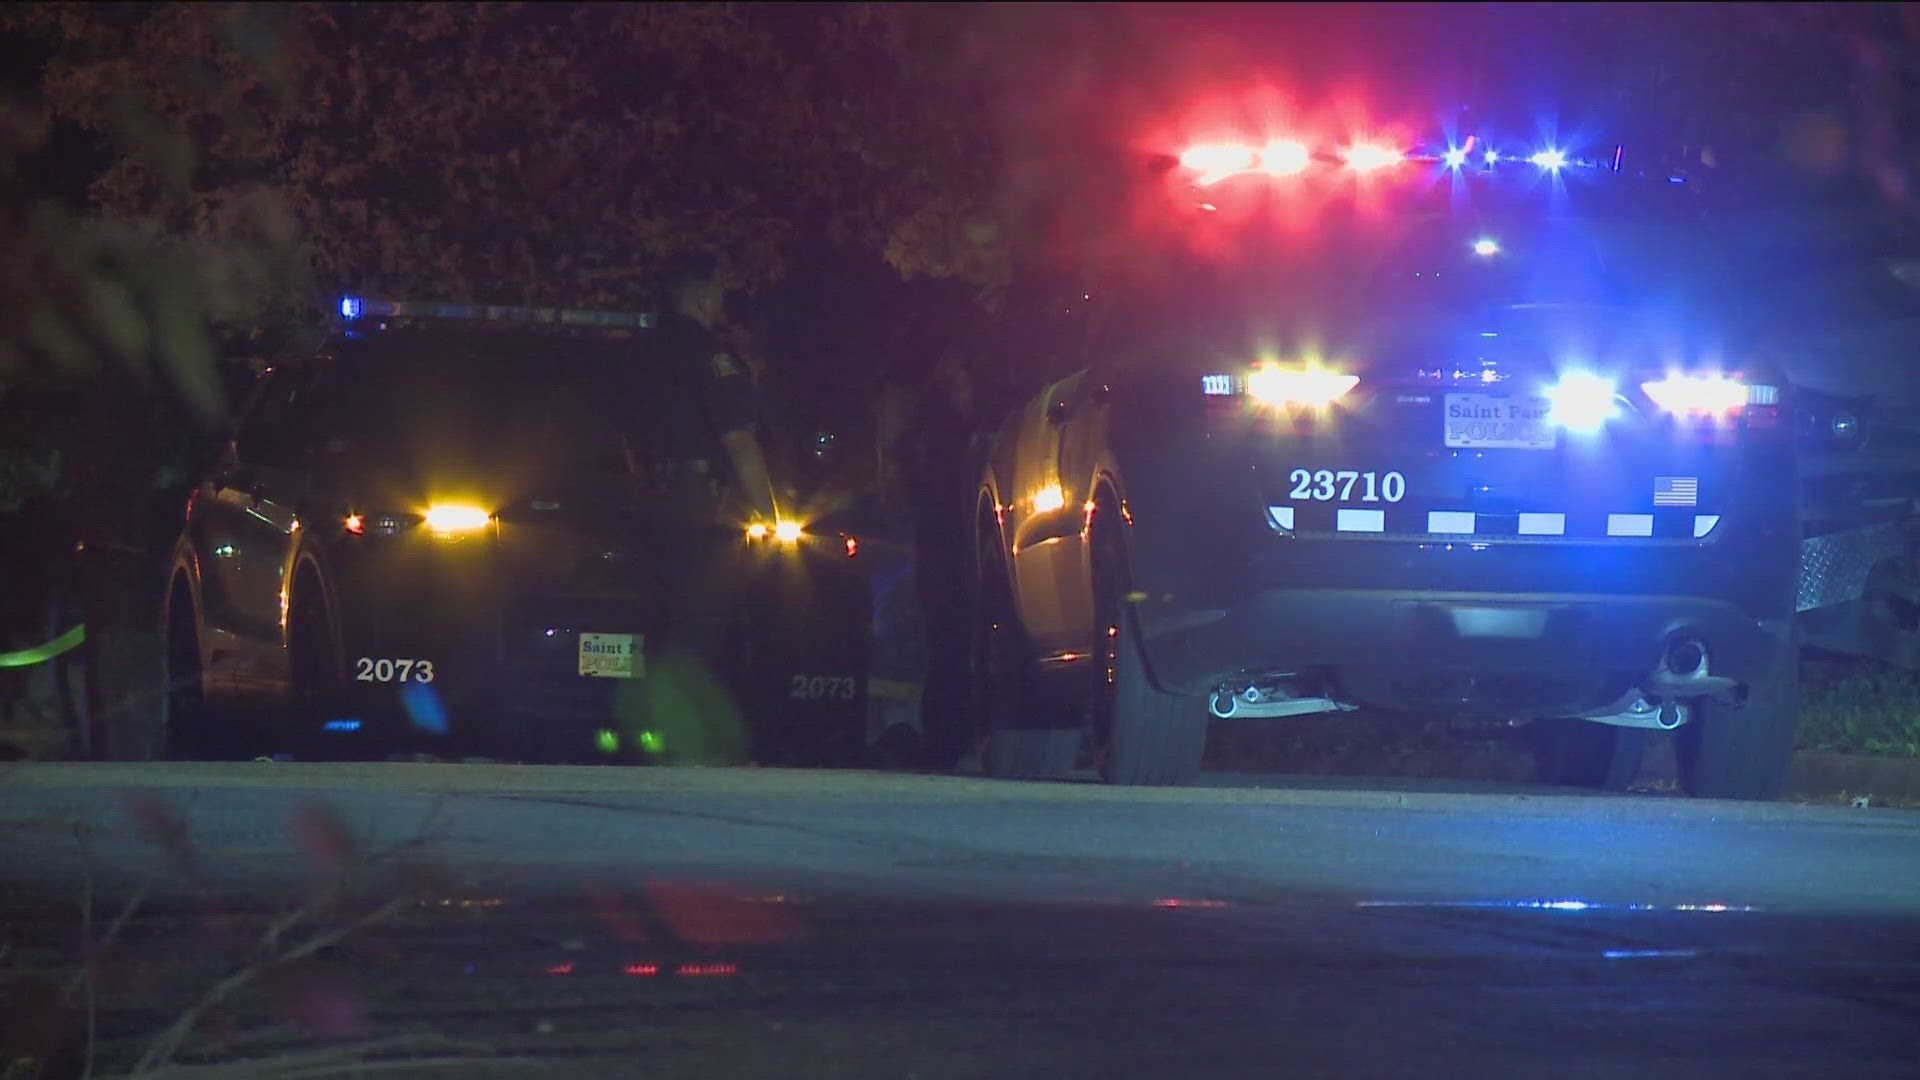 St. Paul Police said the homicide occurred around 10:30 p.m. Monday near Hazel Park.